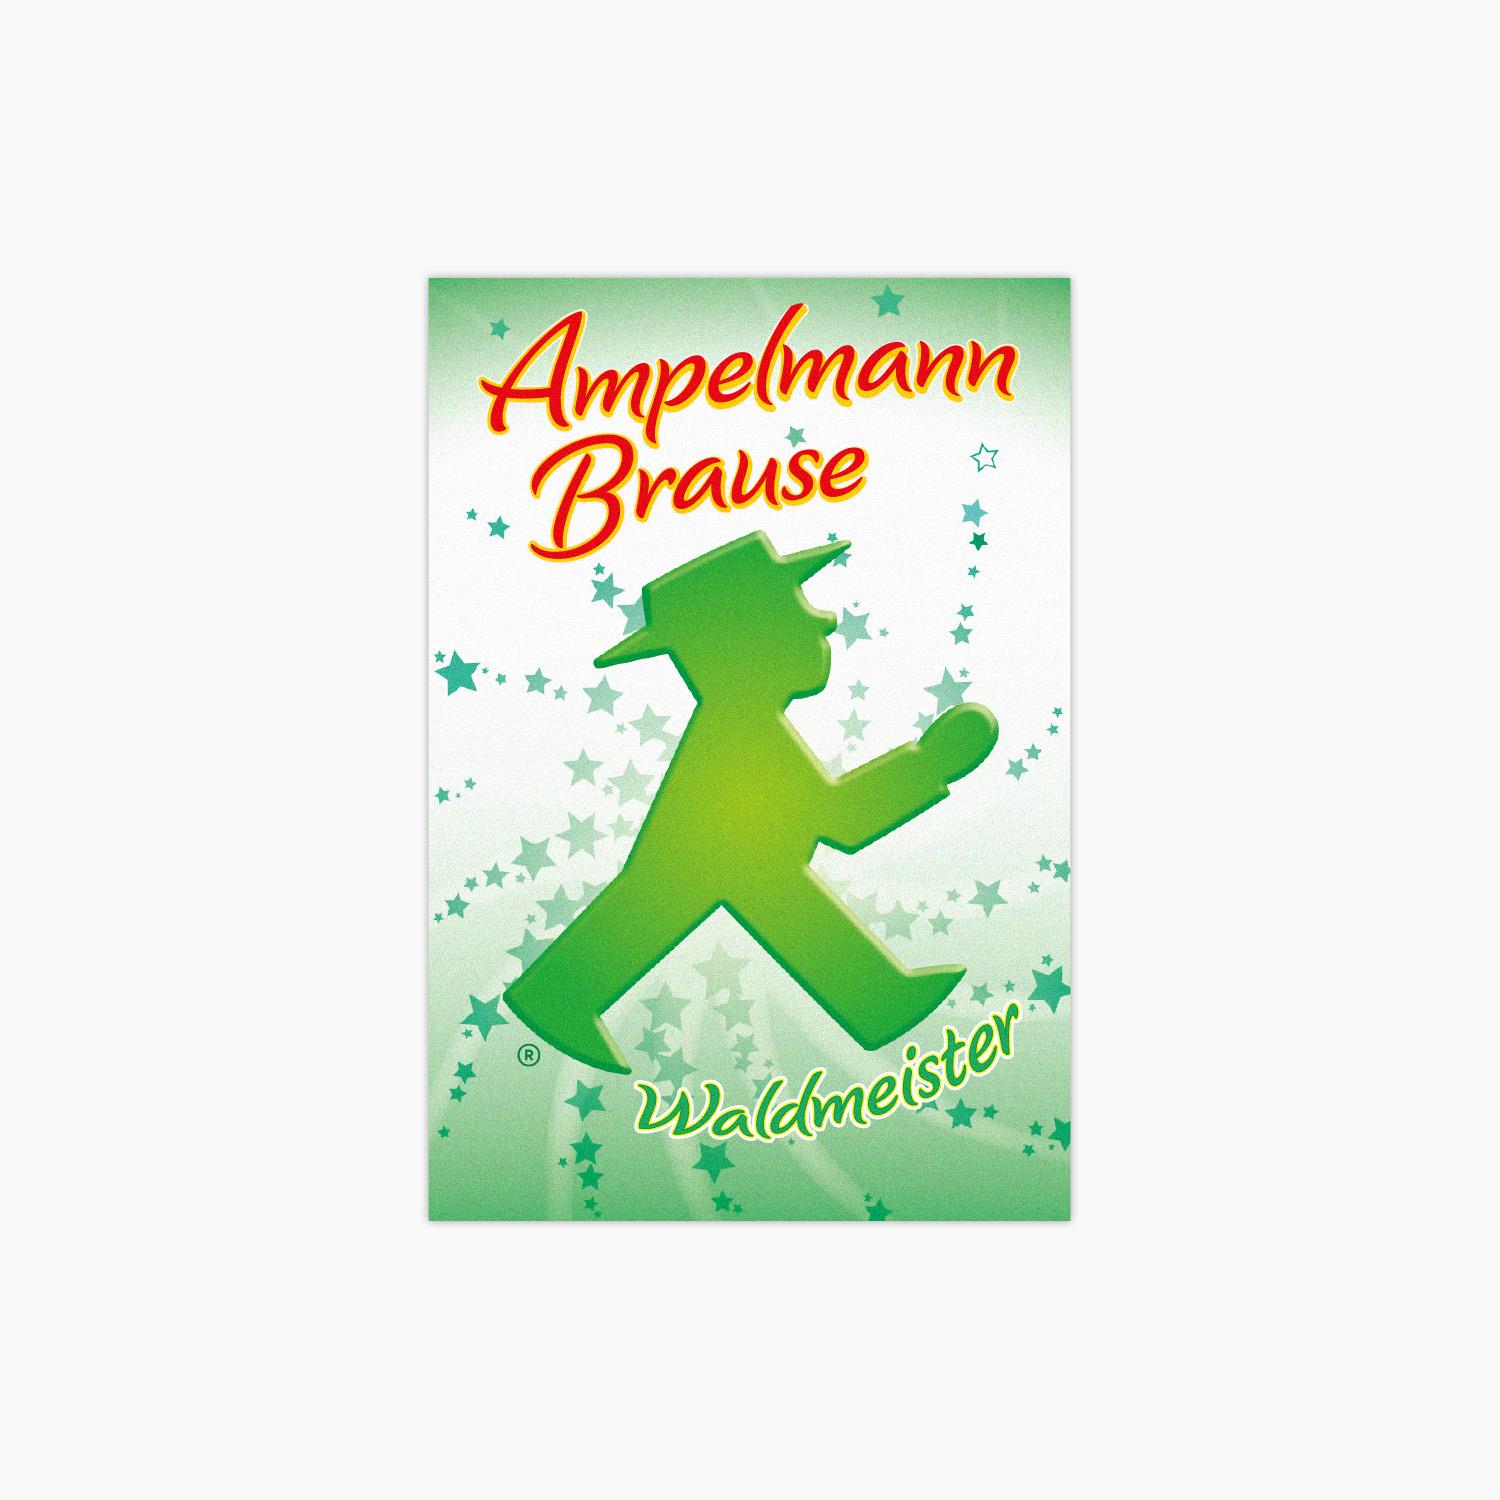 AMPELMANN BRAUSE / Waldmeister Brausepulver